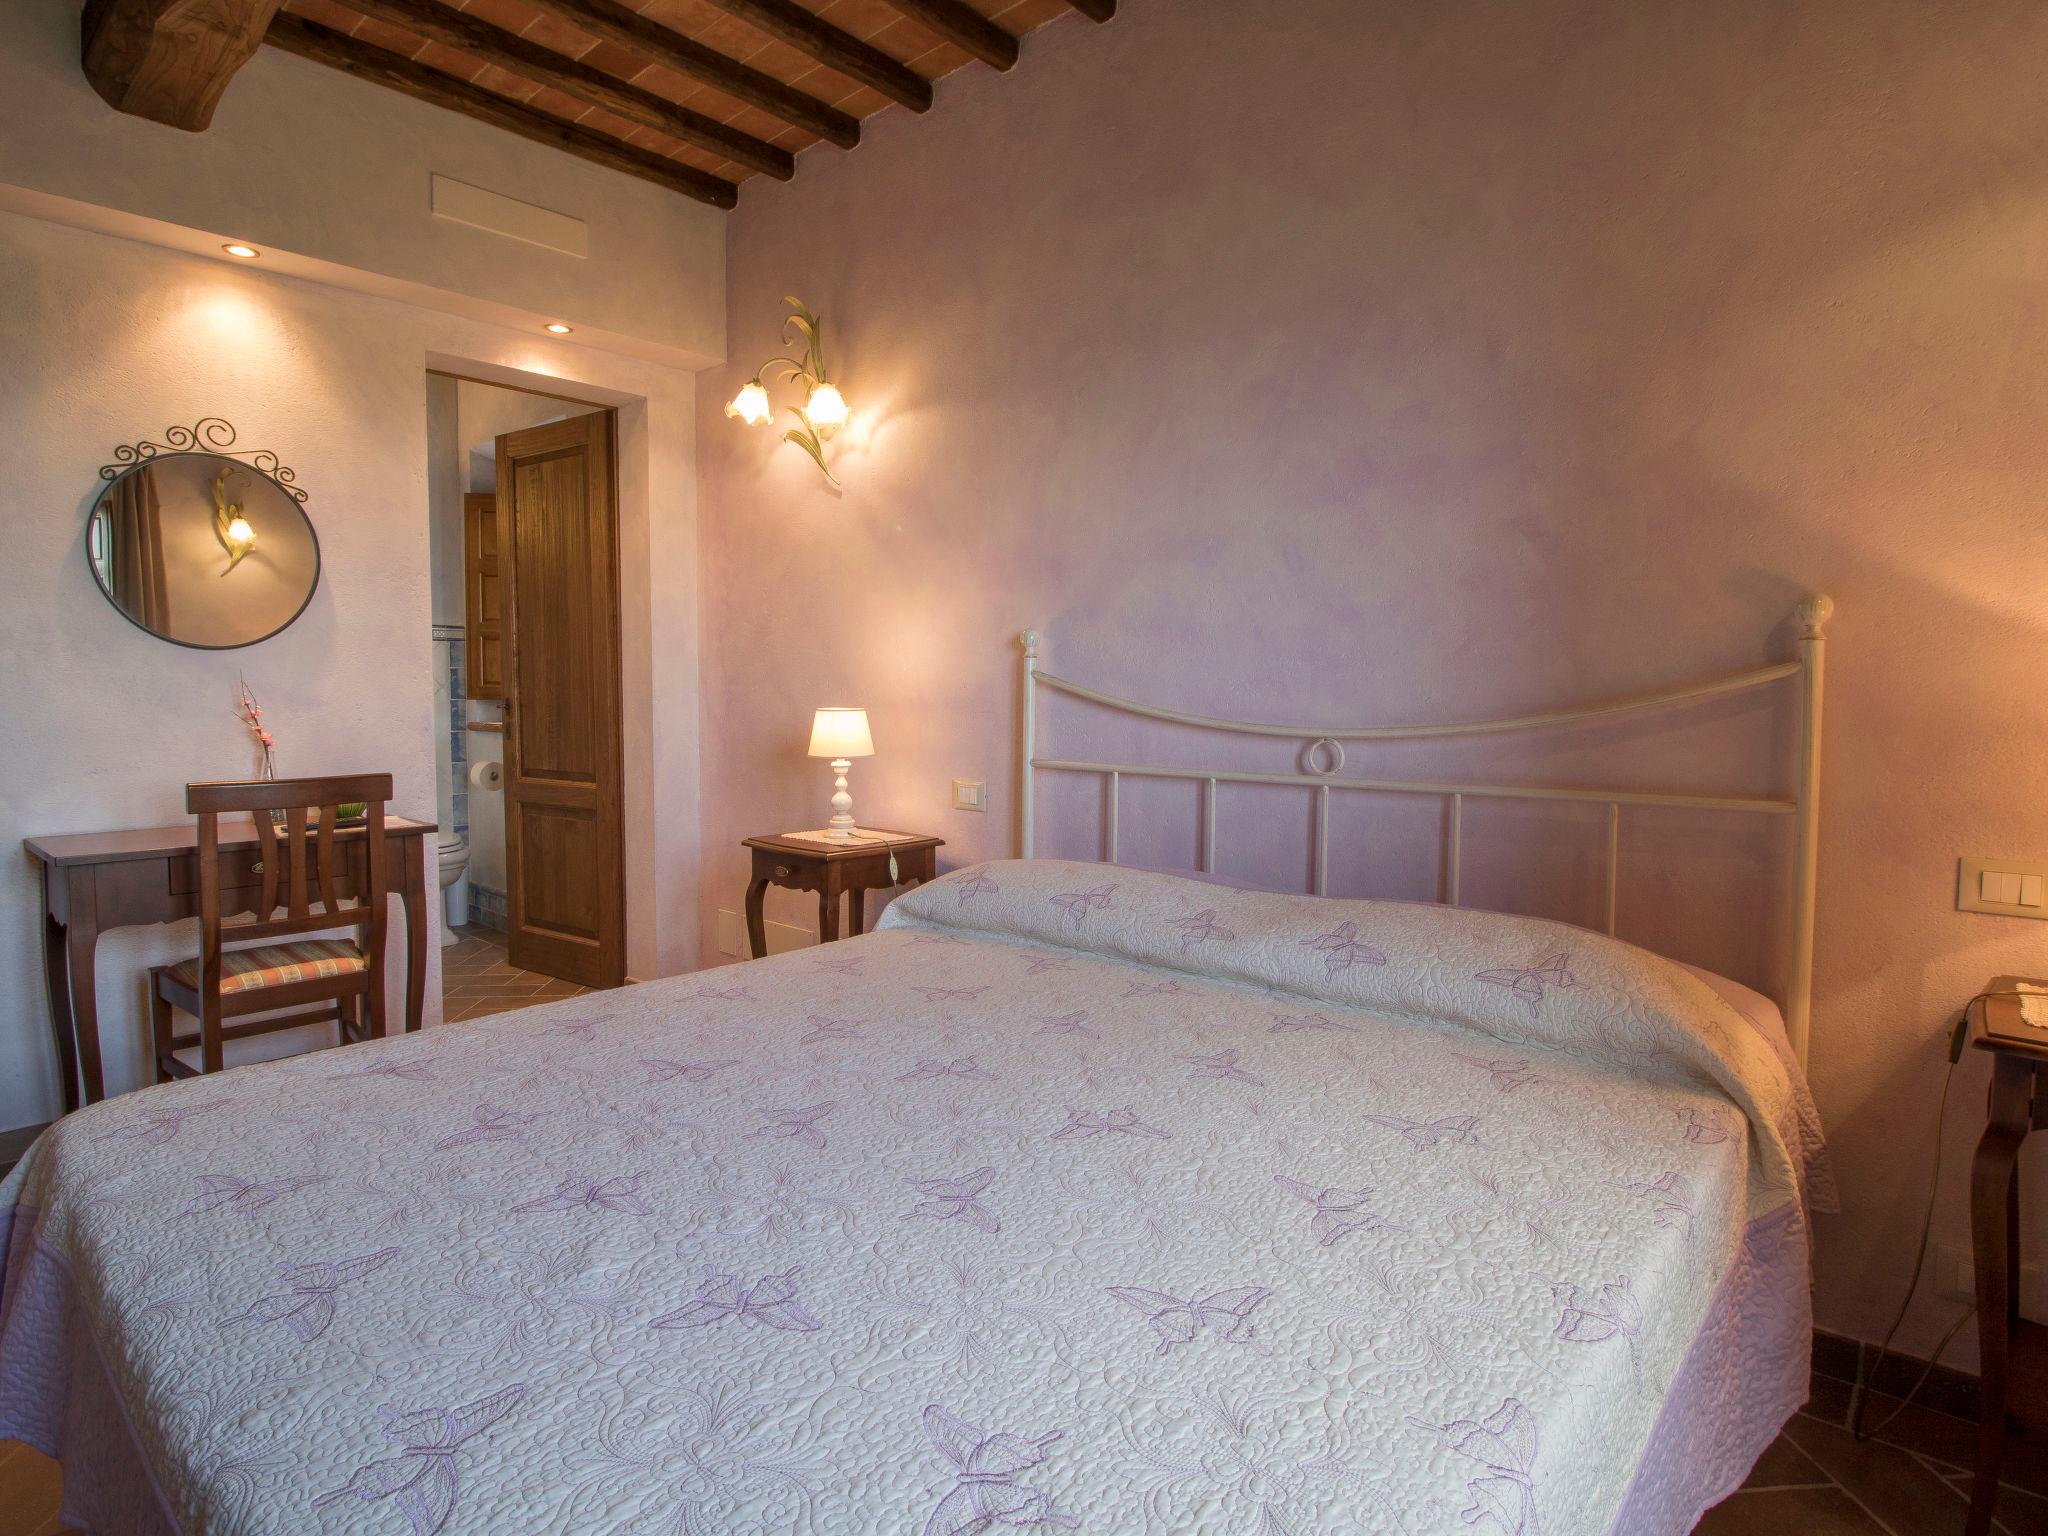 Foto 22 - Haus mit 5 Schlafzimmern in Civitella in Val di Chiana mit privater pool und terrasse